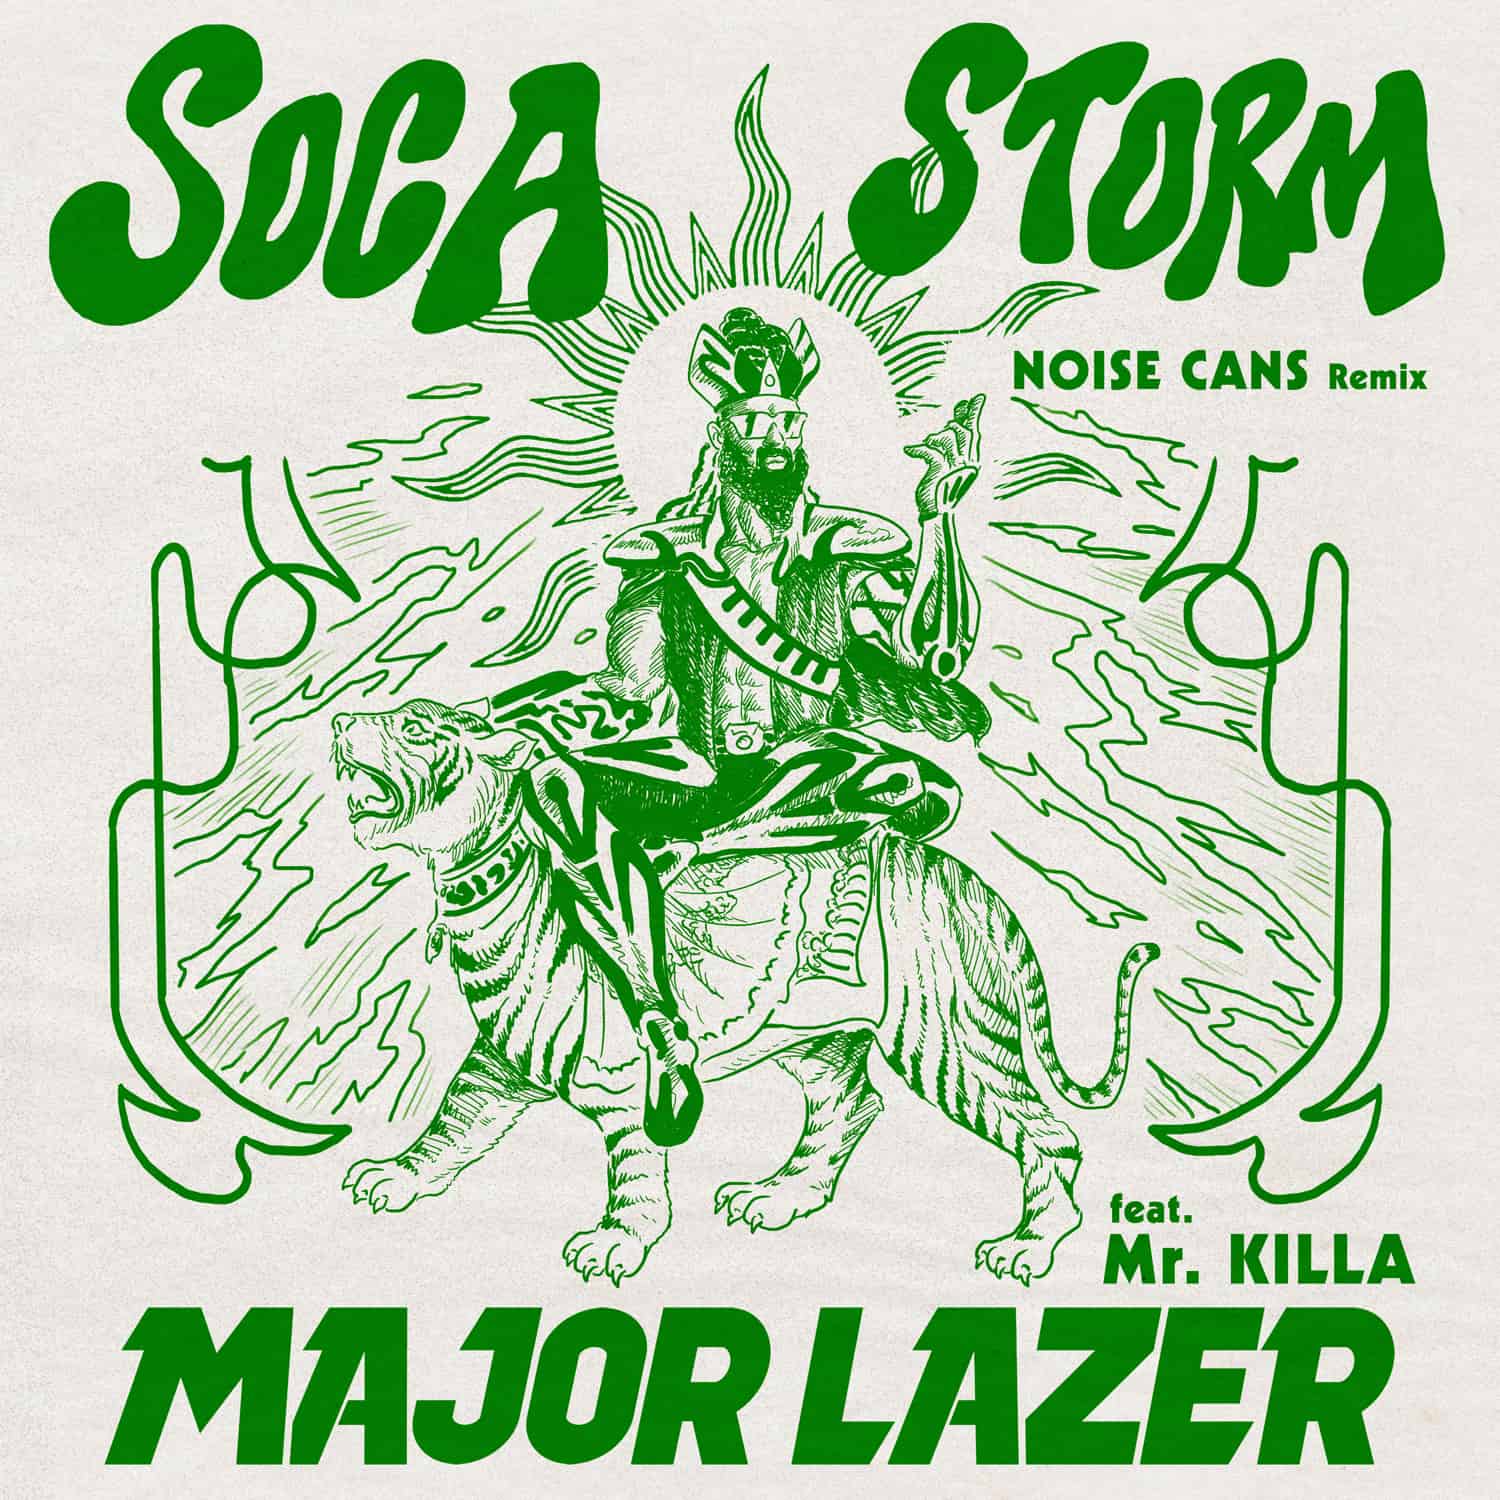 Major Lazer & Mr. Killa  - Soca Storm (Noise Cans Remix)